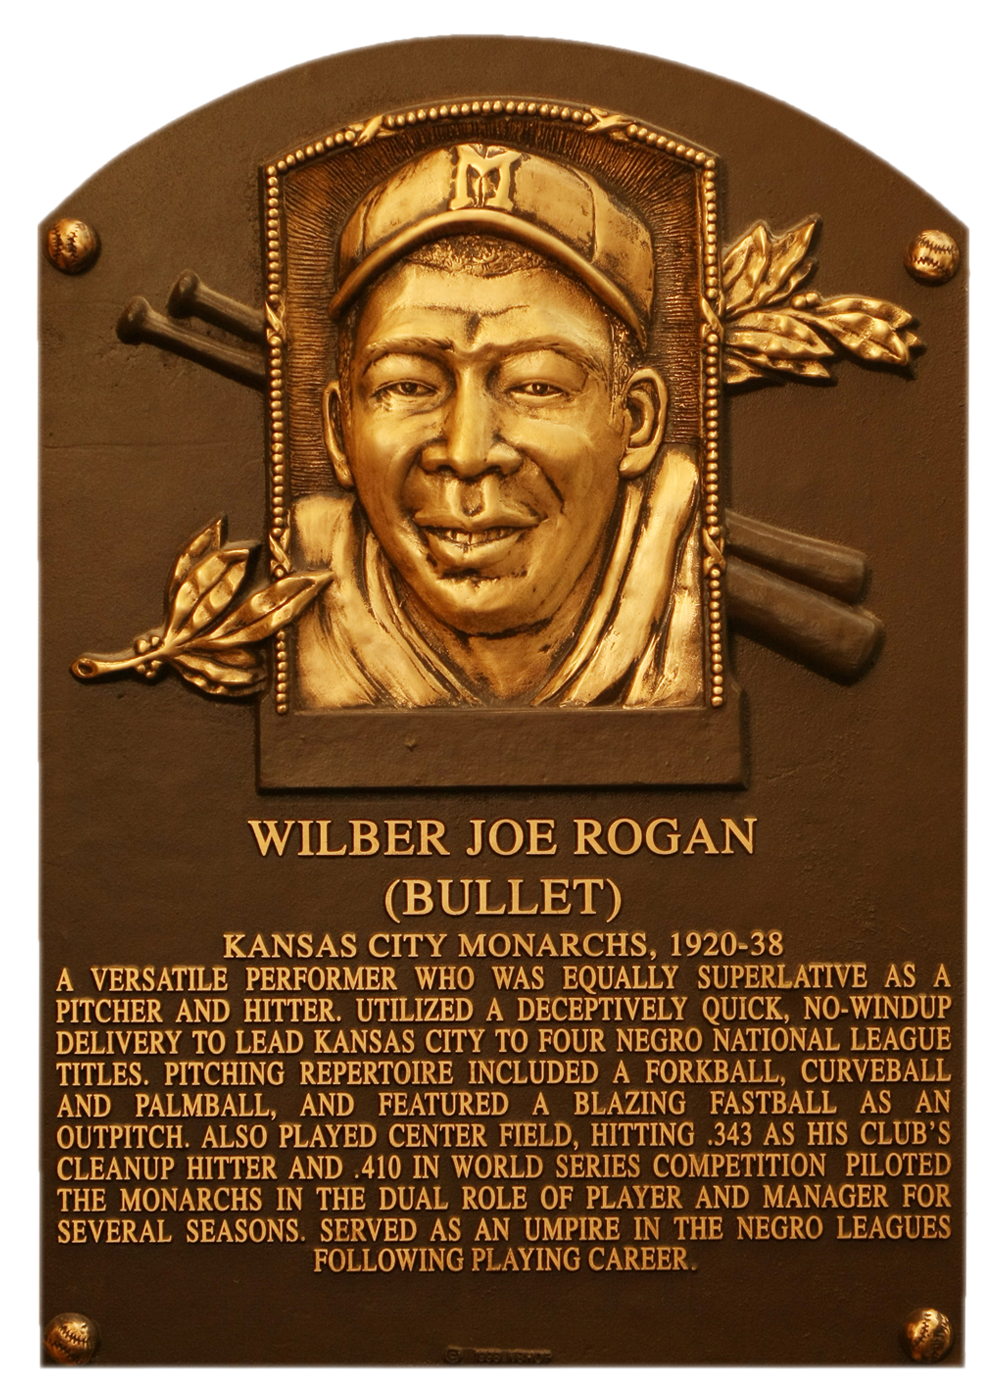 Bullet Rogan Hall of Fame plaque